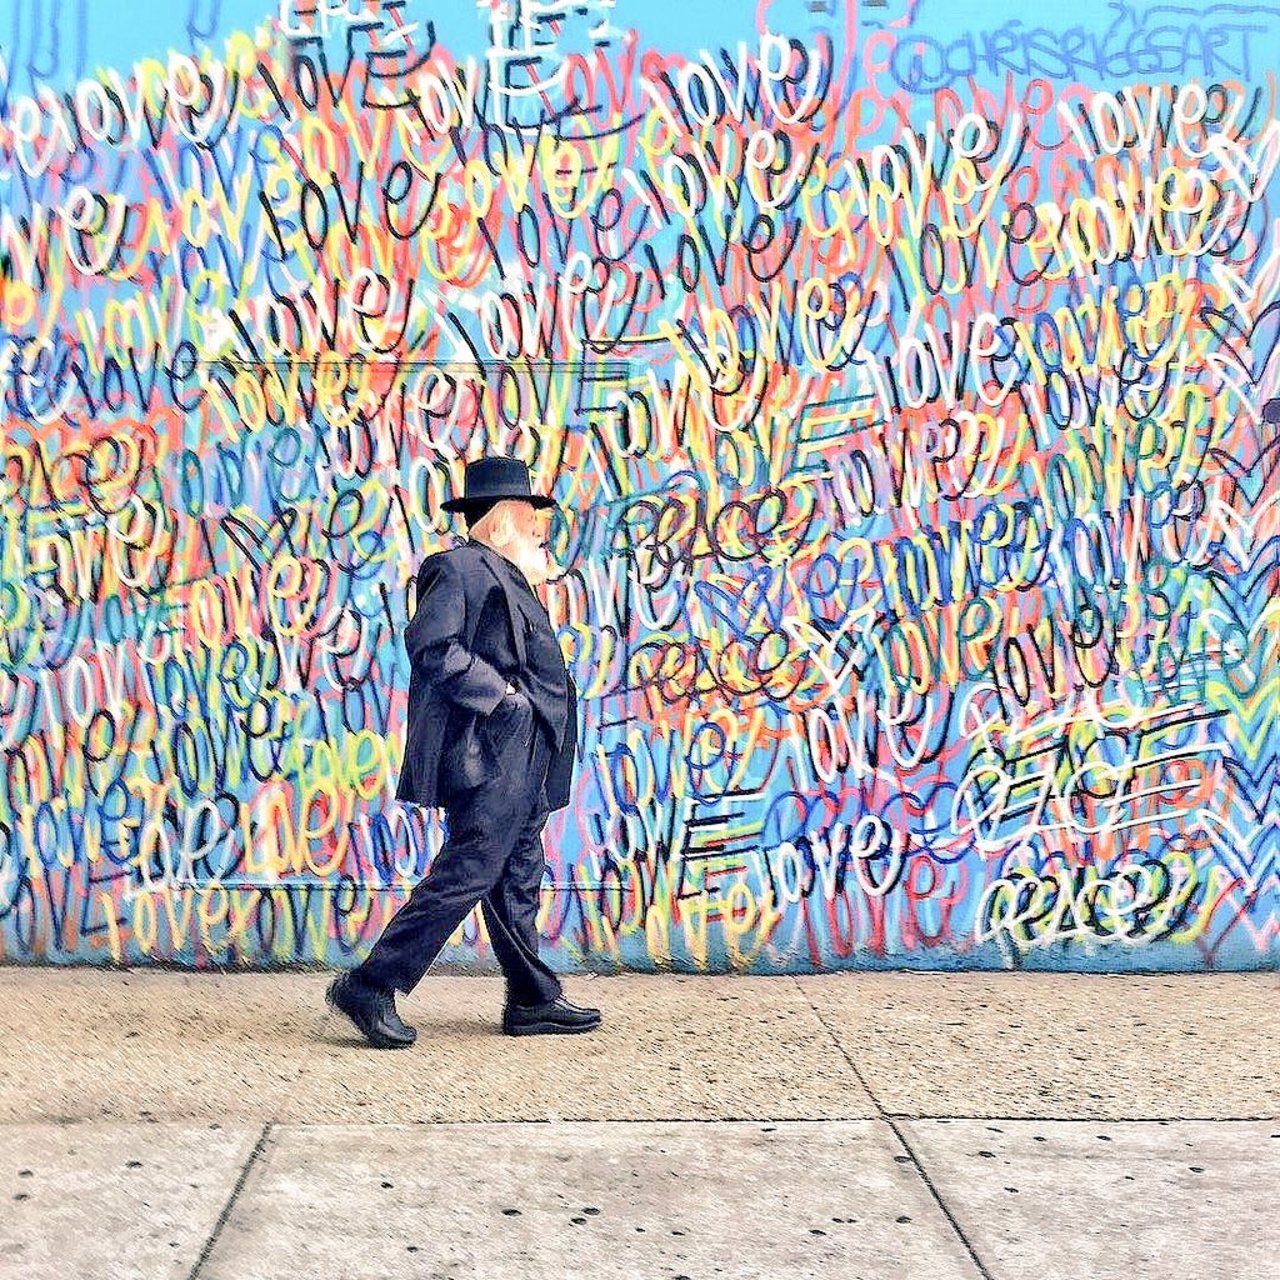 RT @PierreABISAAB: MT @circumjacent: #NewYorkCity #graffiti photo by @trinnadeleon https://instagram.com/p/9L2-R6NA5E/ #StreetArt https://t.co/cldOmDwlft